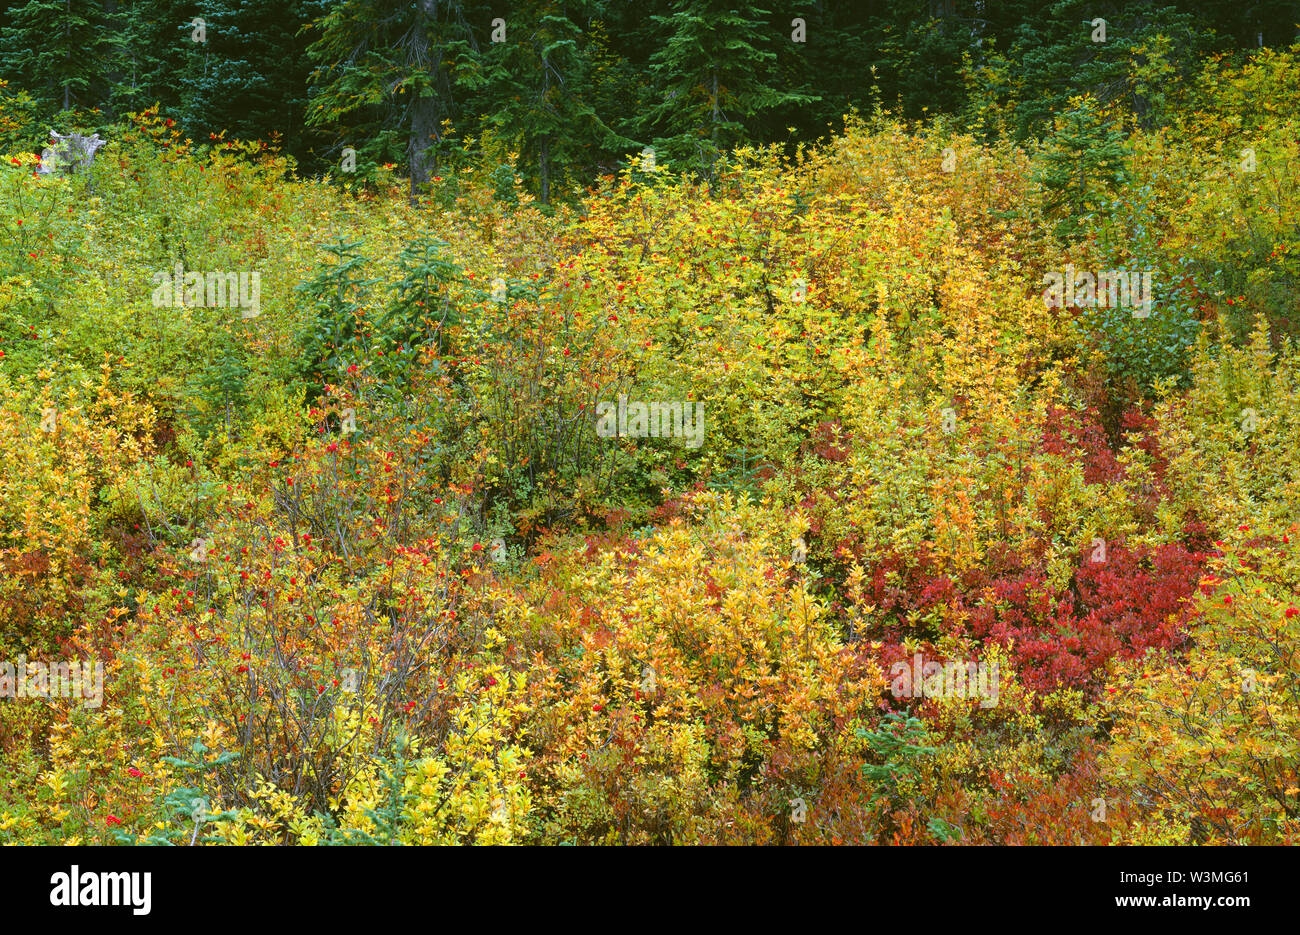 USA, Washington, Mt. Rainier National Park, Mountain ash and huckleberry display fall colors near edge of evergreen forest. Stock Photo